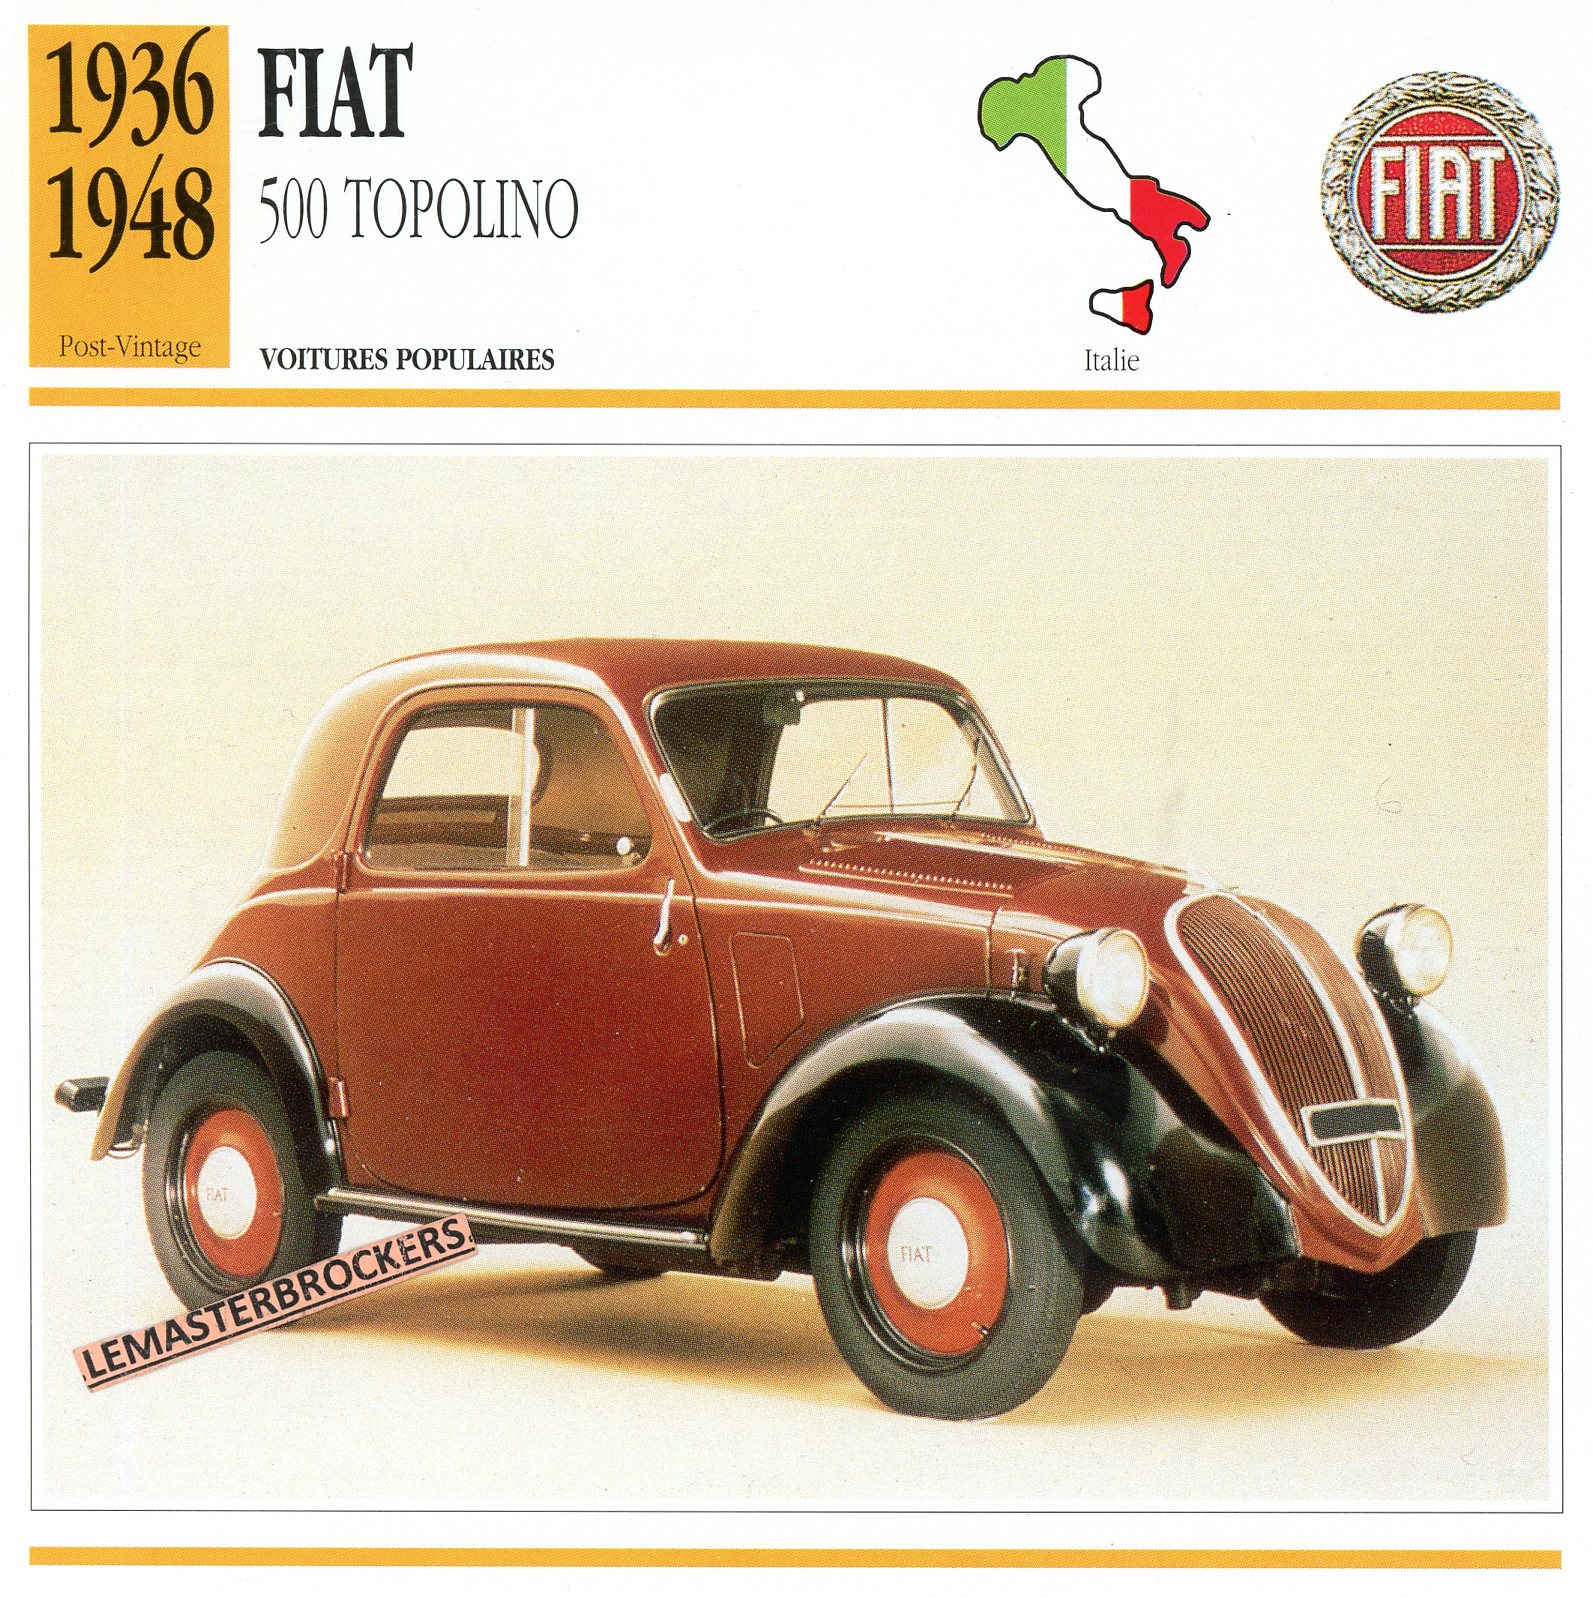 FIAT-500-TOPOLINO-FICHE-AUTO-CARD-CARS-LEMASTERBROCKERS